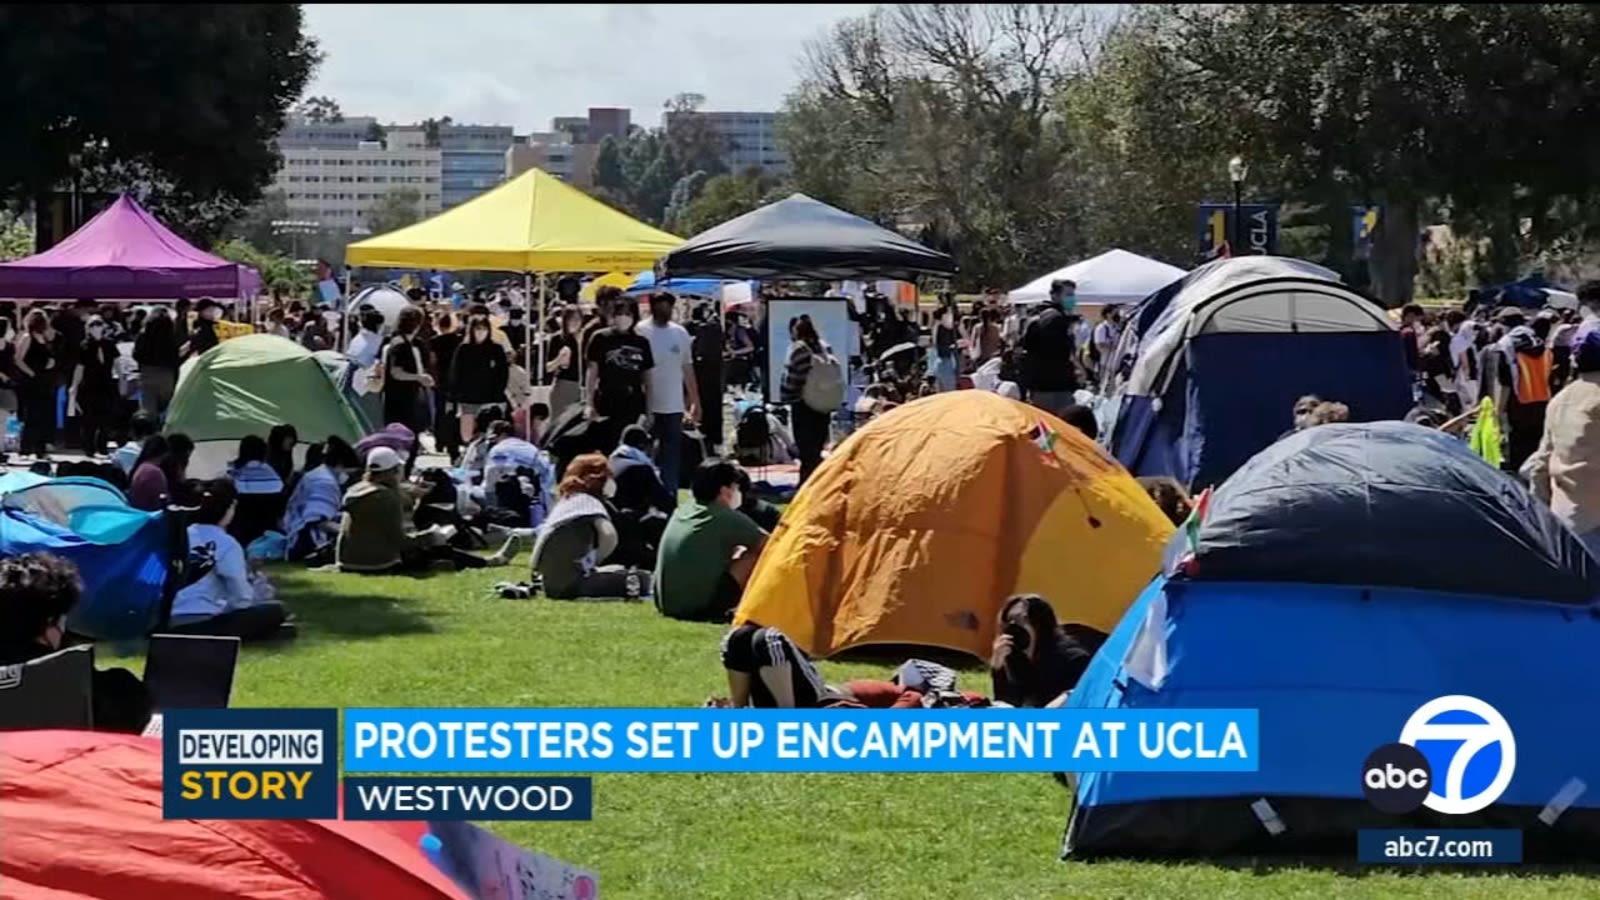 Pro-Palestinian demonstrators set up encampment at UCLA, met by Israeli supporters